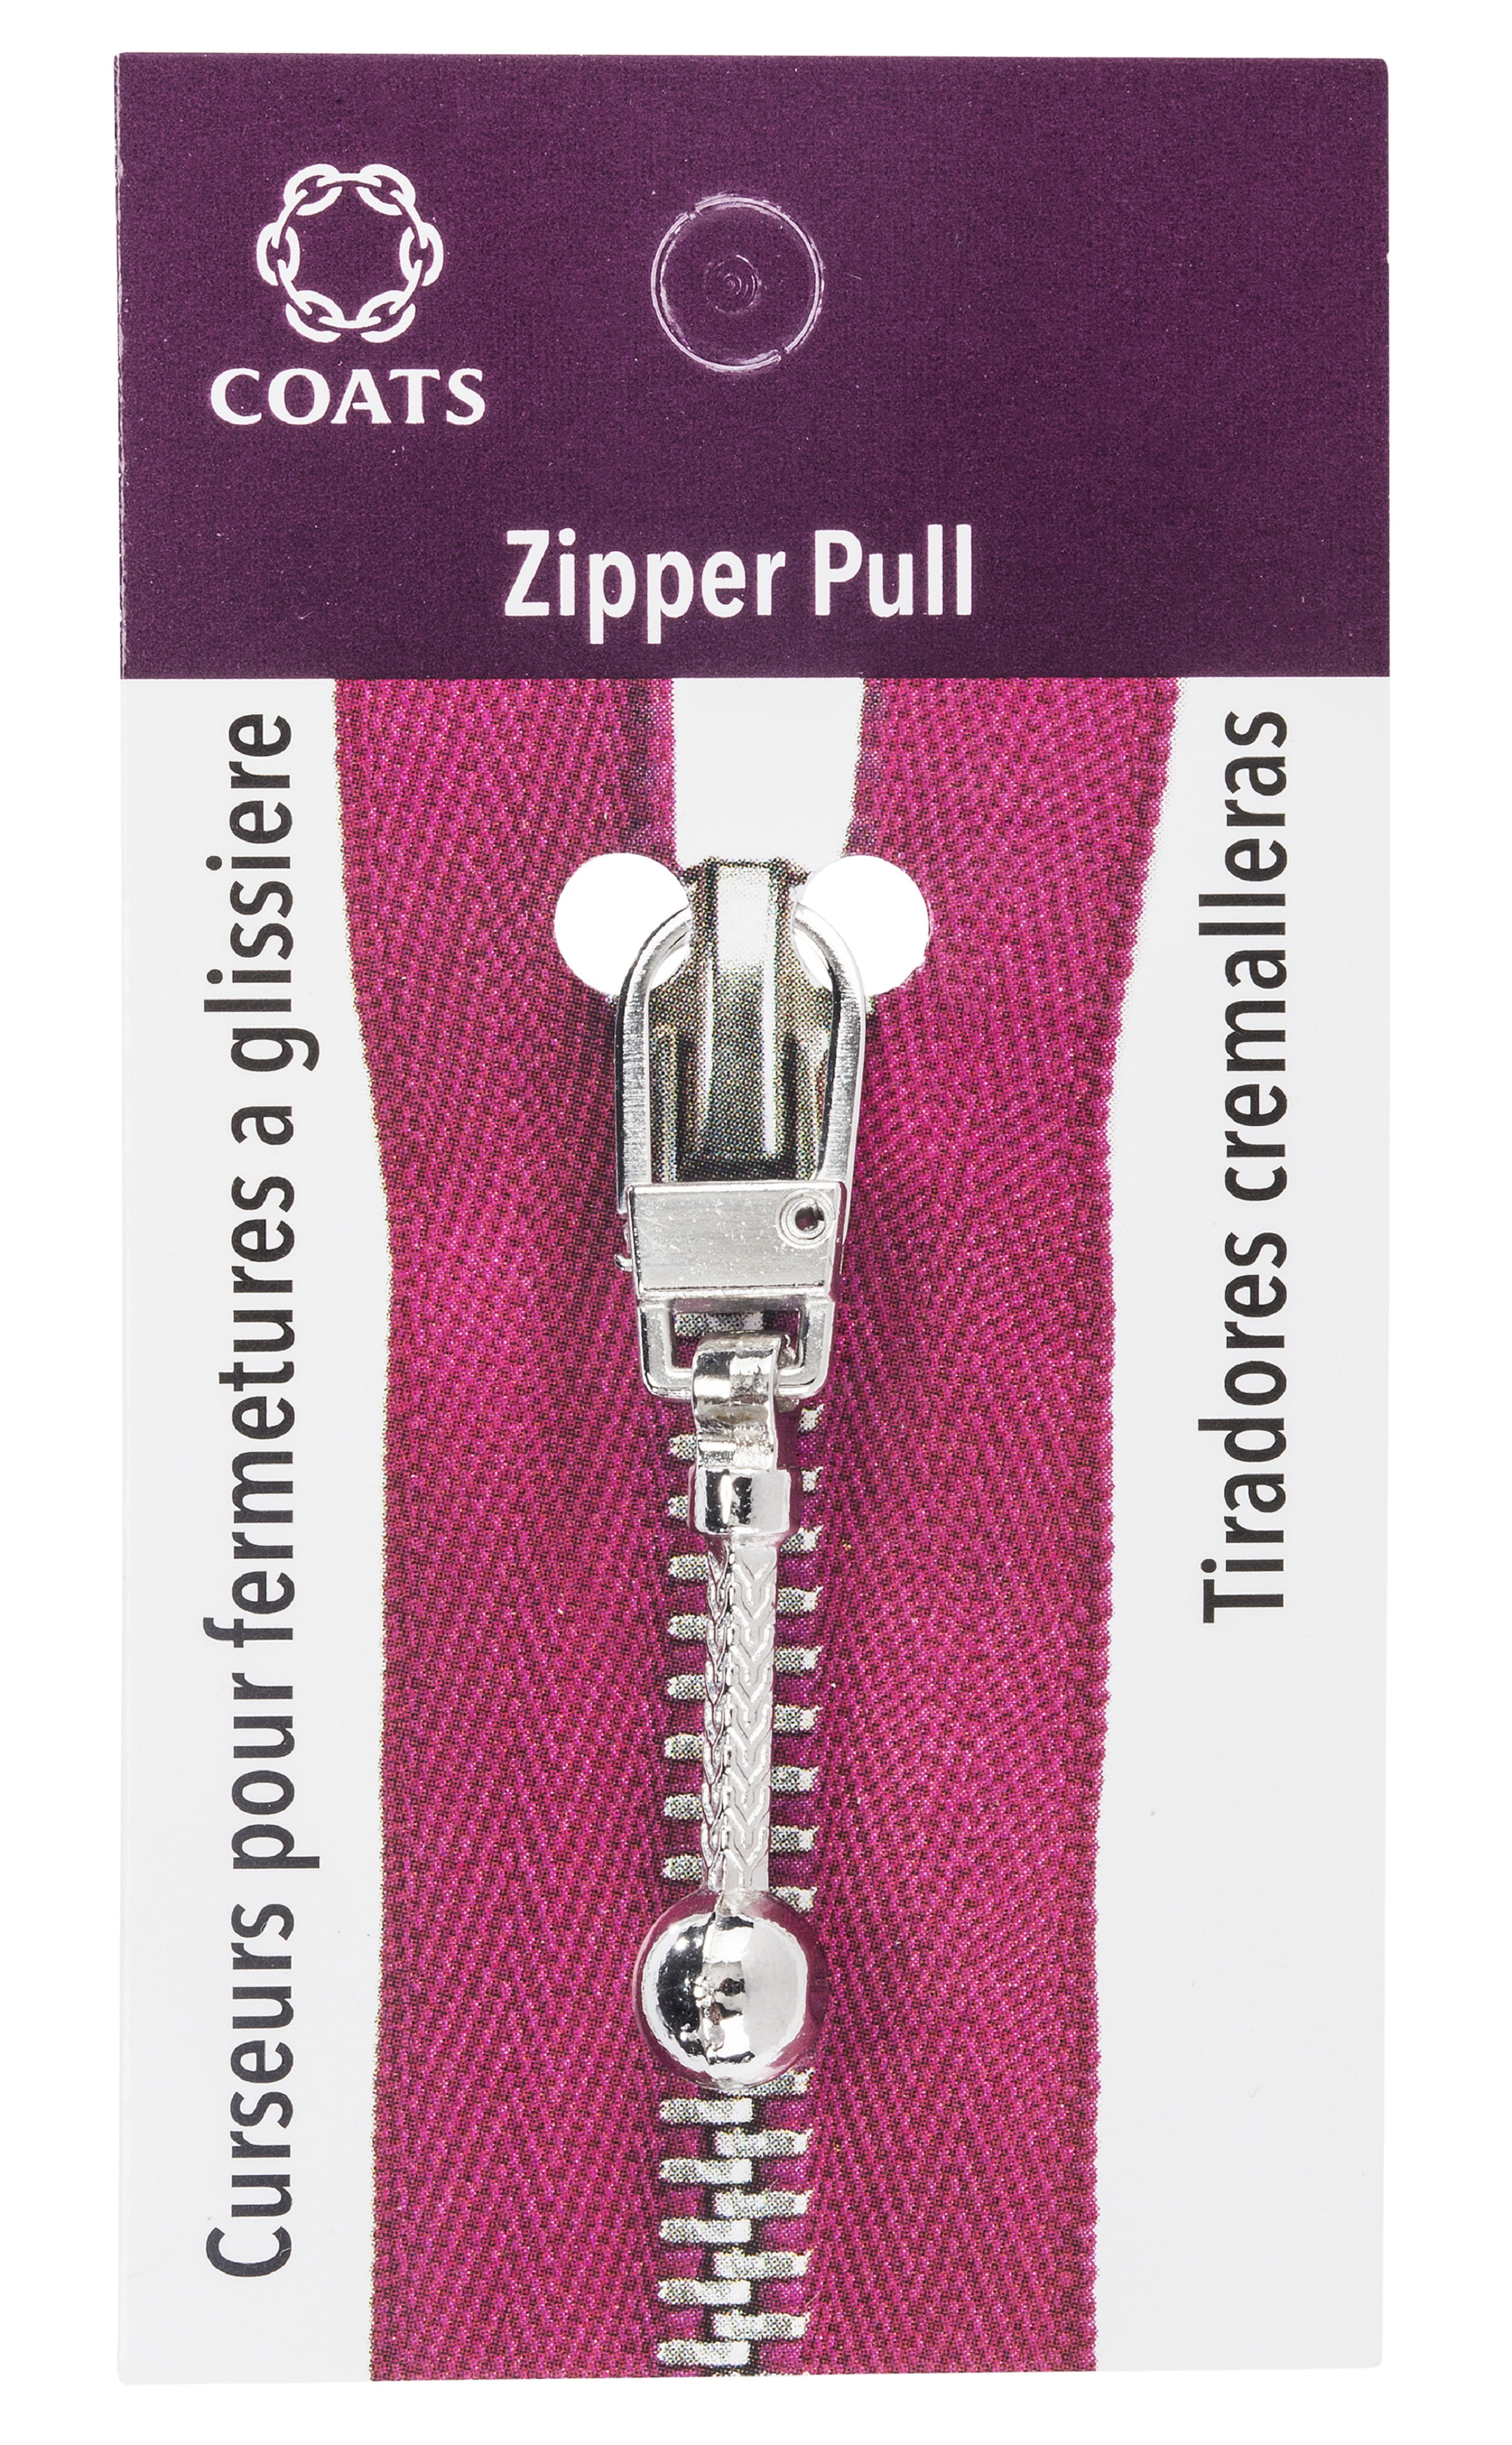 Zipuller, Zipper Pull Dress Zipper Pull Helper, Zipper Assistant, Zipper  Aid, Zip up Dresses and Boots, Unique Design Works on Virtually All Zipper  Types, Zip up dress by yourself Black N